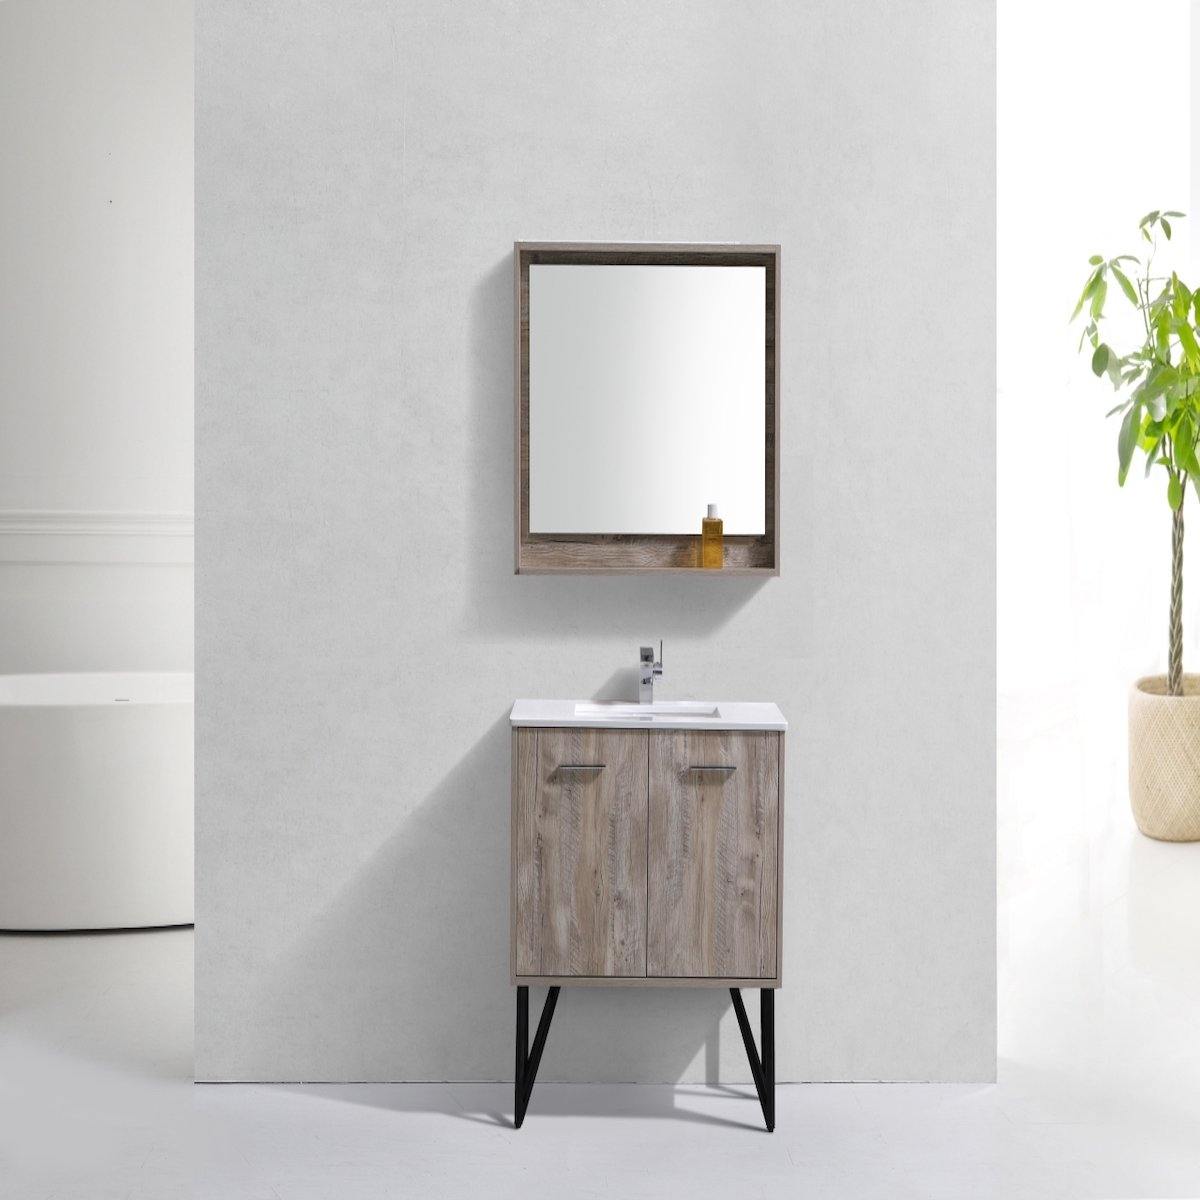 KubeBath Bosco 36" Nature Wood Freestanding Single Vanity with Quartz Countertop KB36-NW in Bathroom #finish_nature wood